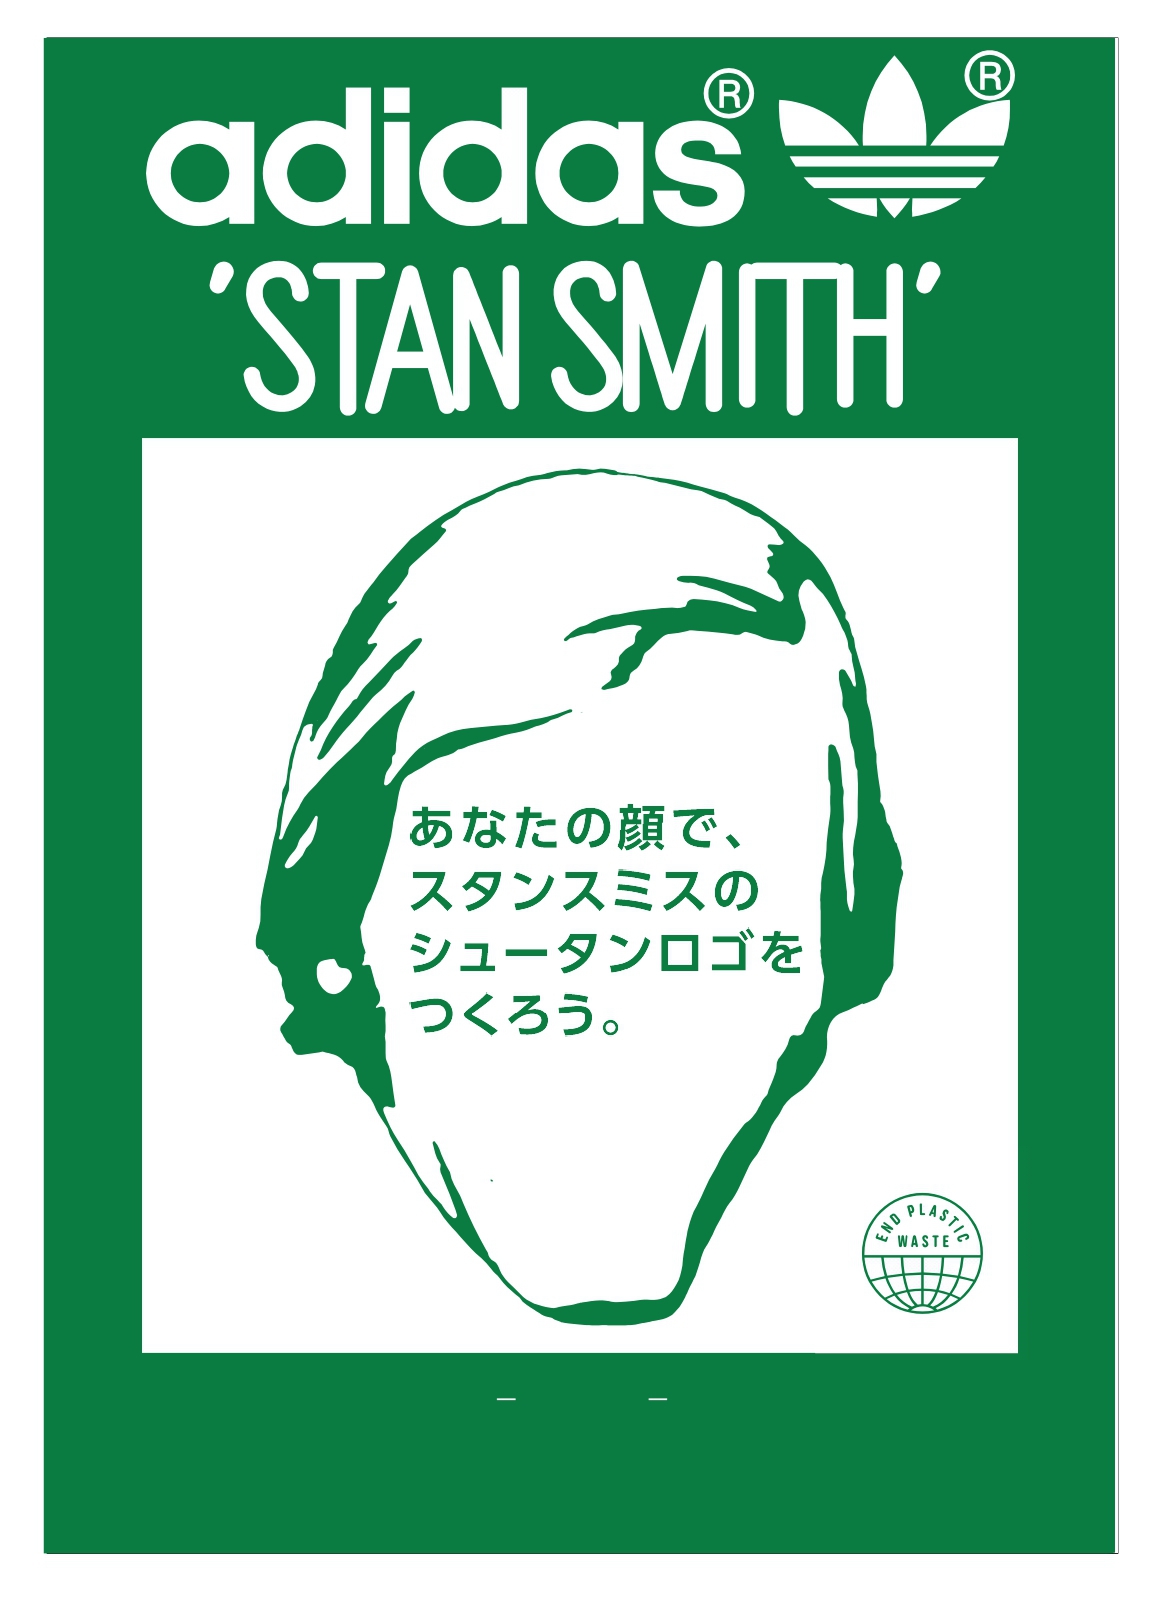 Stan Themselvesフォトブース あなたの顔がスタンスミスを象徴するシュータンロゴのデザインに アディダス直営店にて実施中 公式 アディダスオンラインショップ Adidas